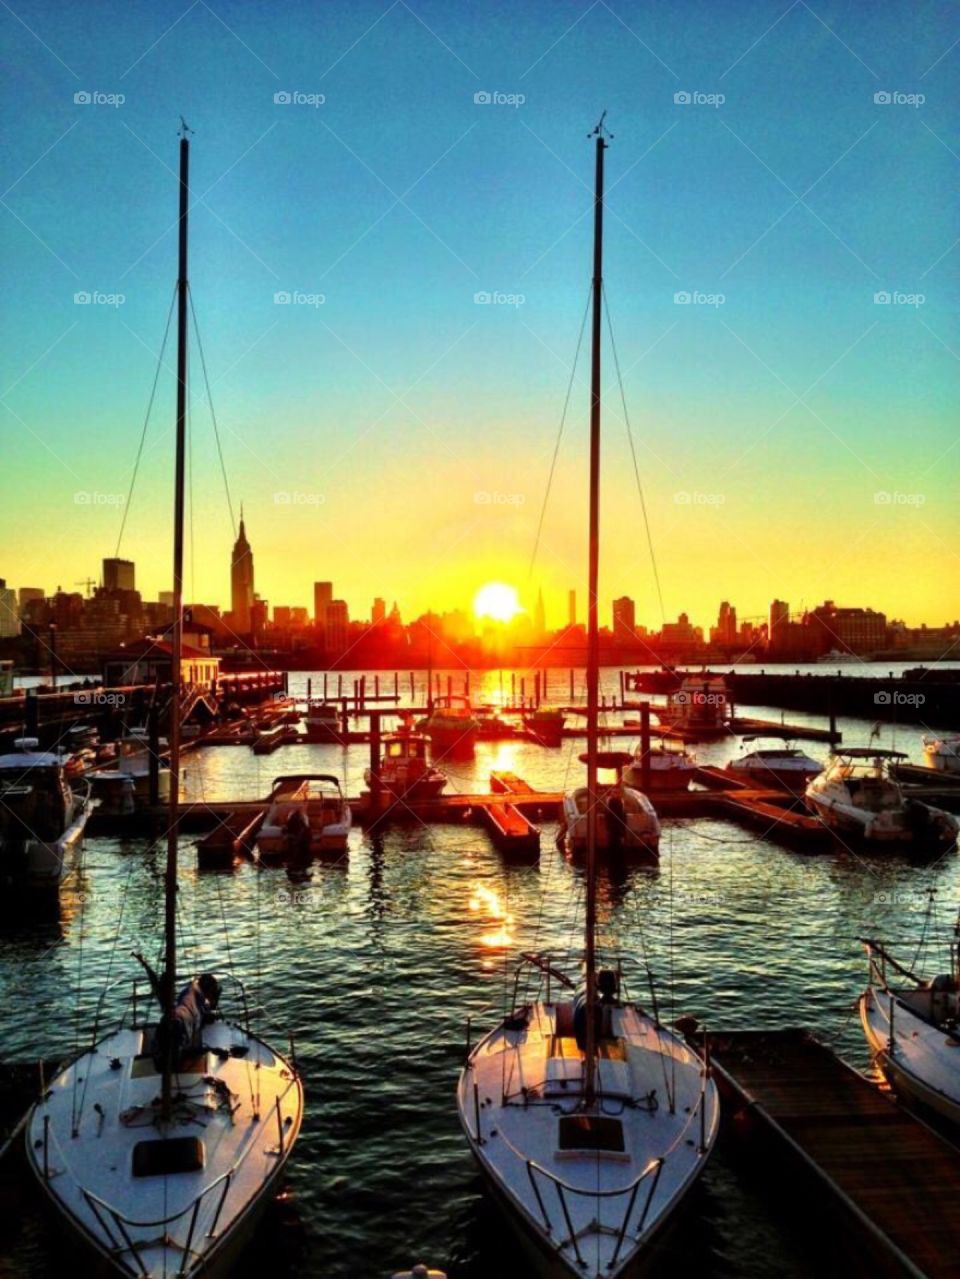 Sailboats at Sunrise on the Hudson River. Sailboats at Sunrise on the Hudson River. New York City